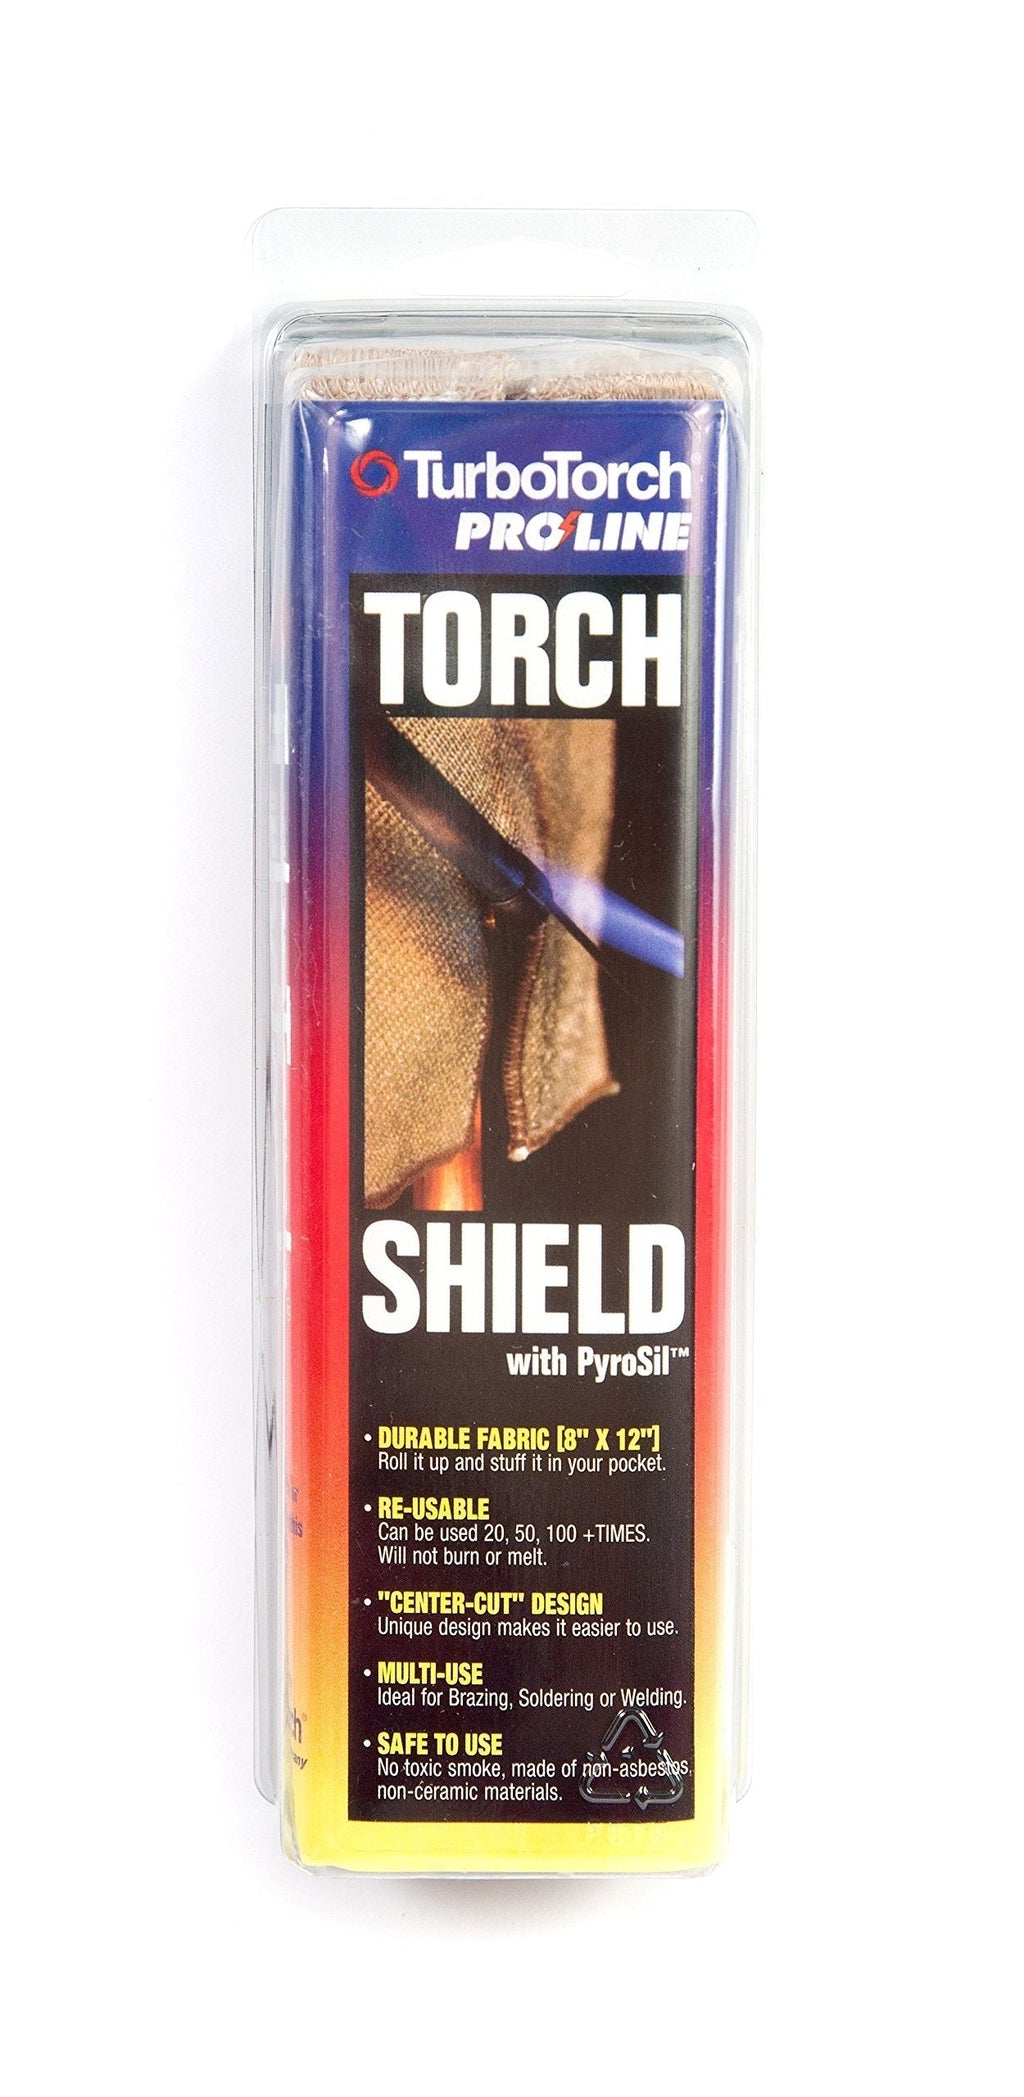  [AUSTRALIA] - TurboTorch 0386-0561 Pl-812 Proline Torch Shield 1 Pack